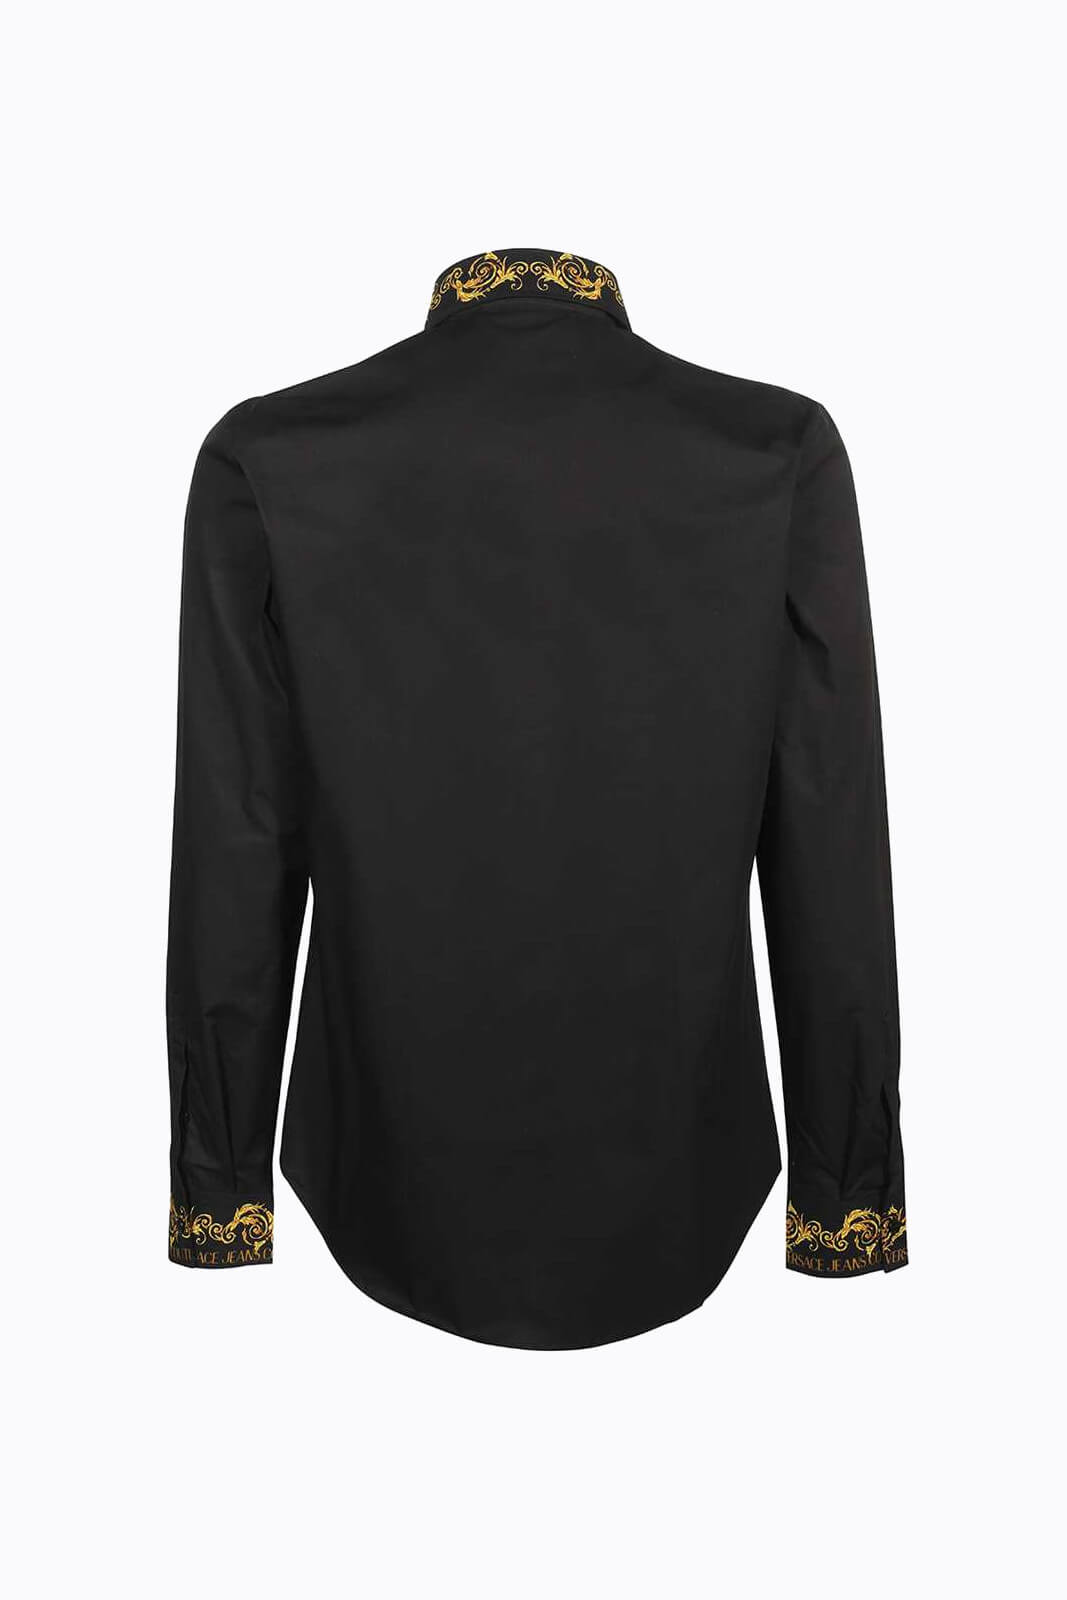 Versace Jeans Couture men's shirt COUTURE LOGO